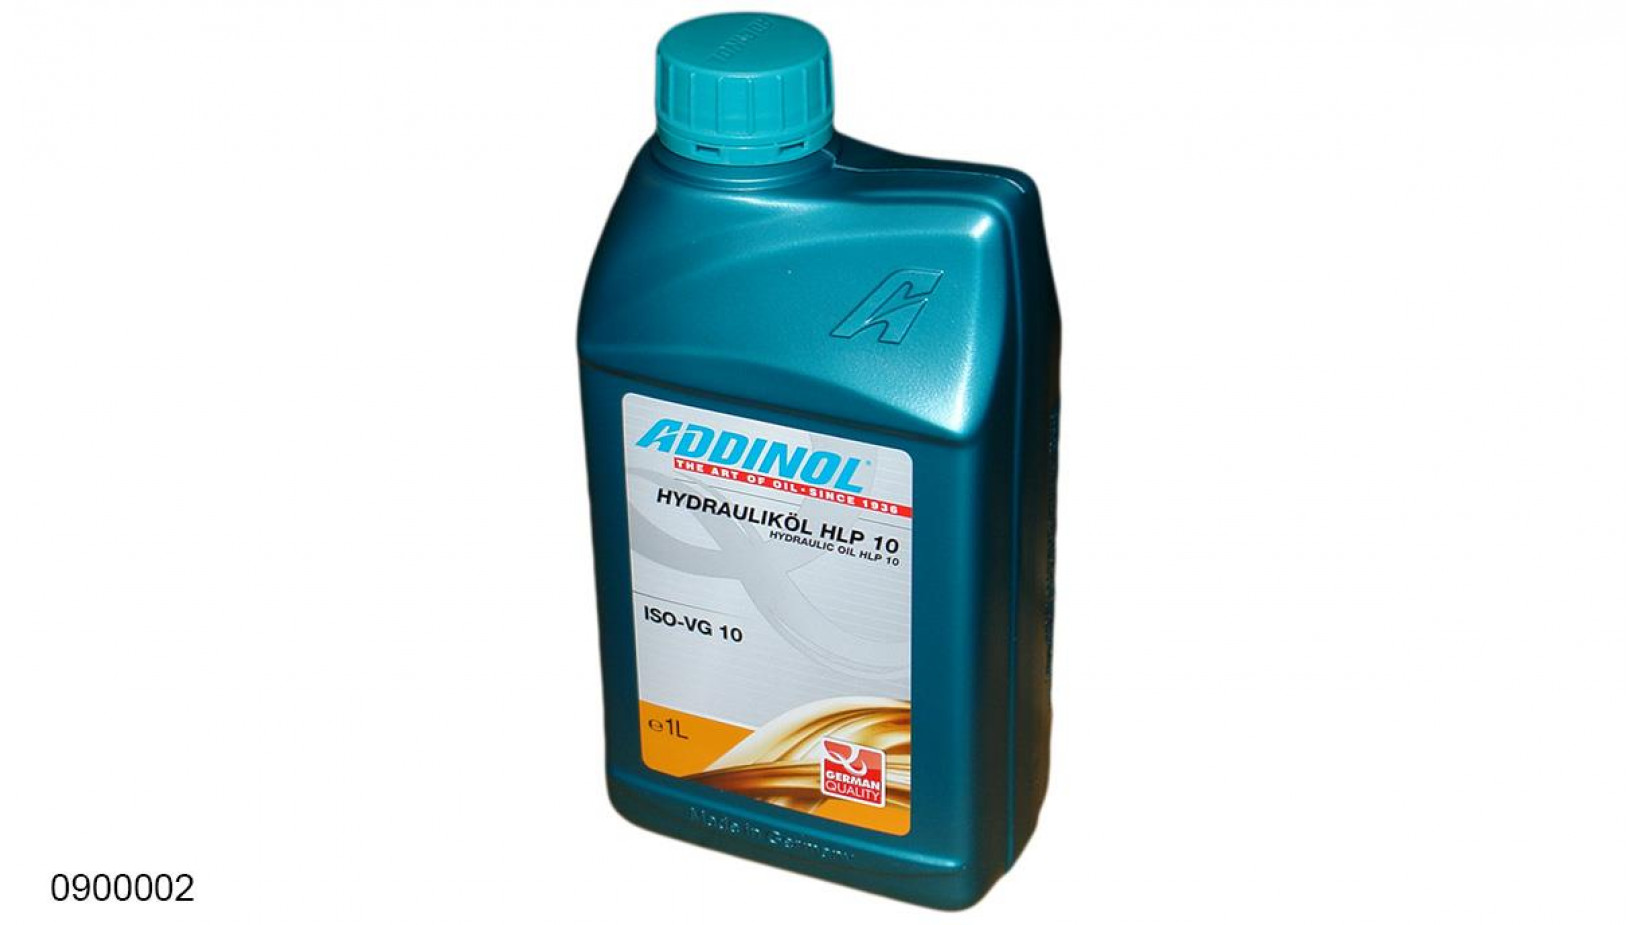 Hydrauliköl DIN 51524-2 HLP 10 / 1L Dose (ADDINOL / Mineralölbasis)